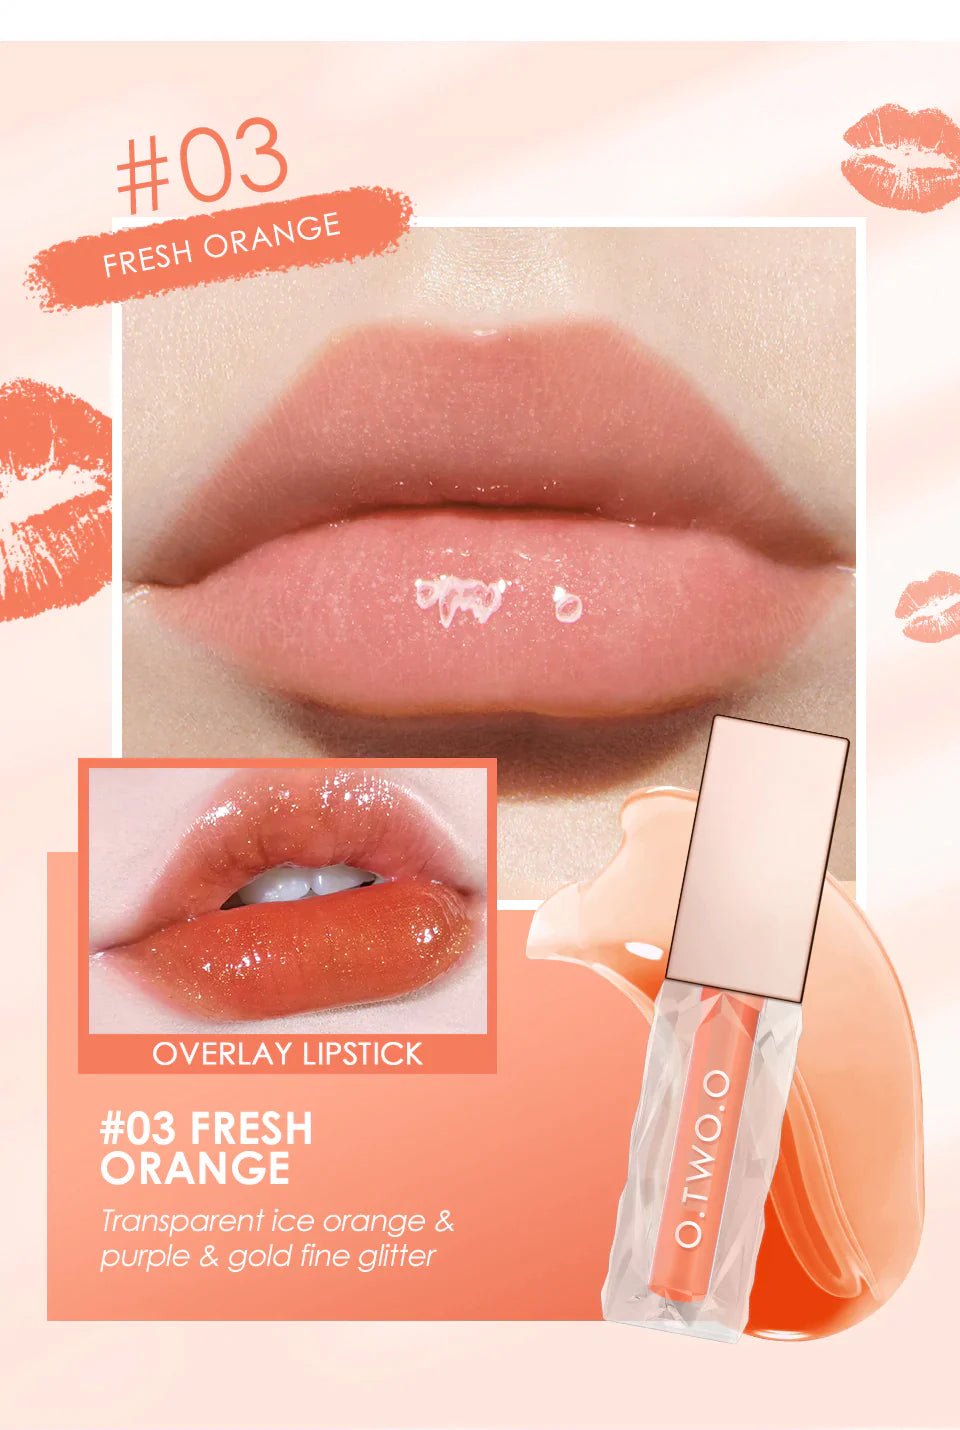 O.TWO.O Gloss Clear Crystal  03 Fresh Orange